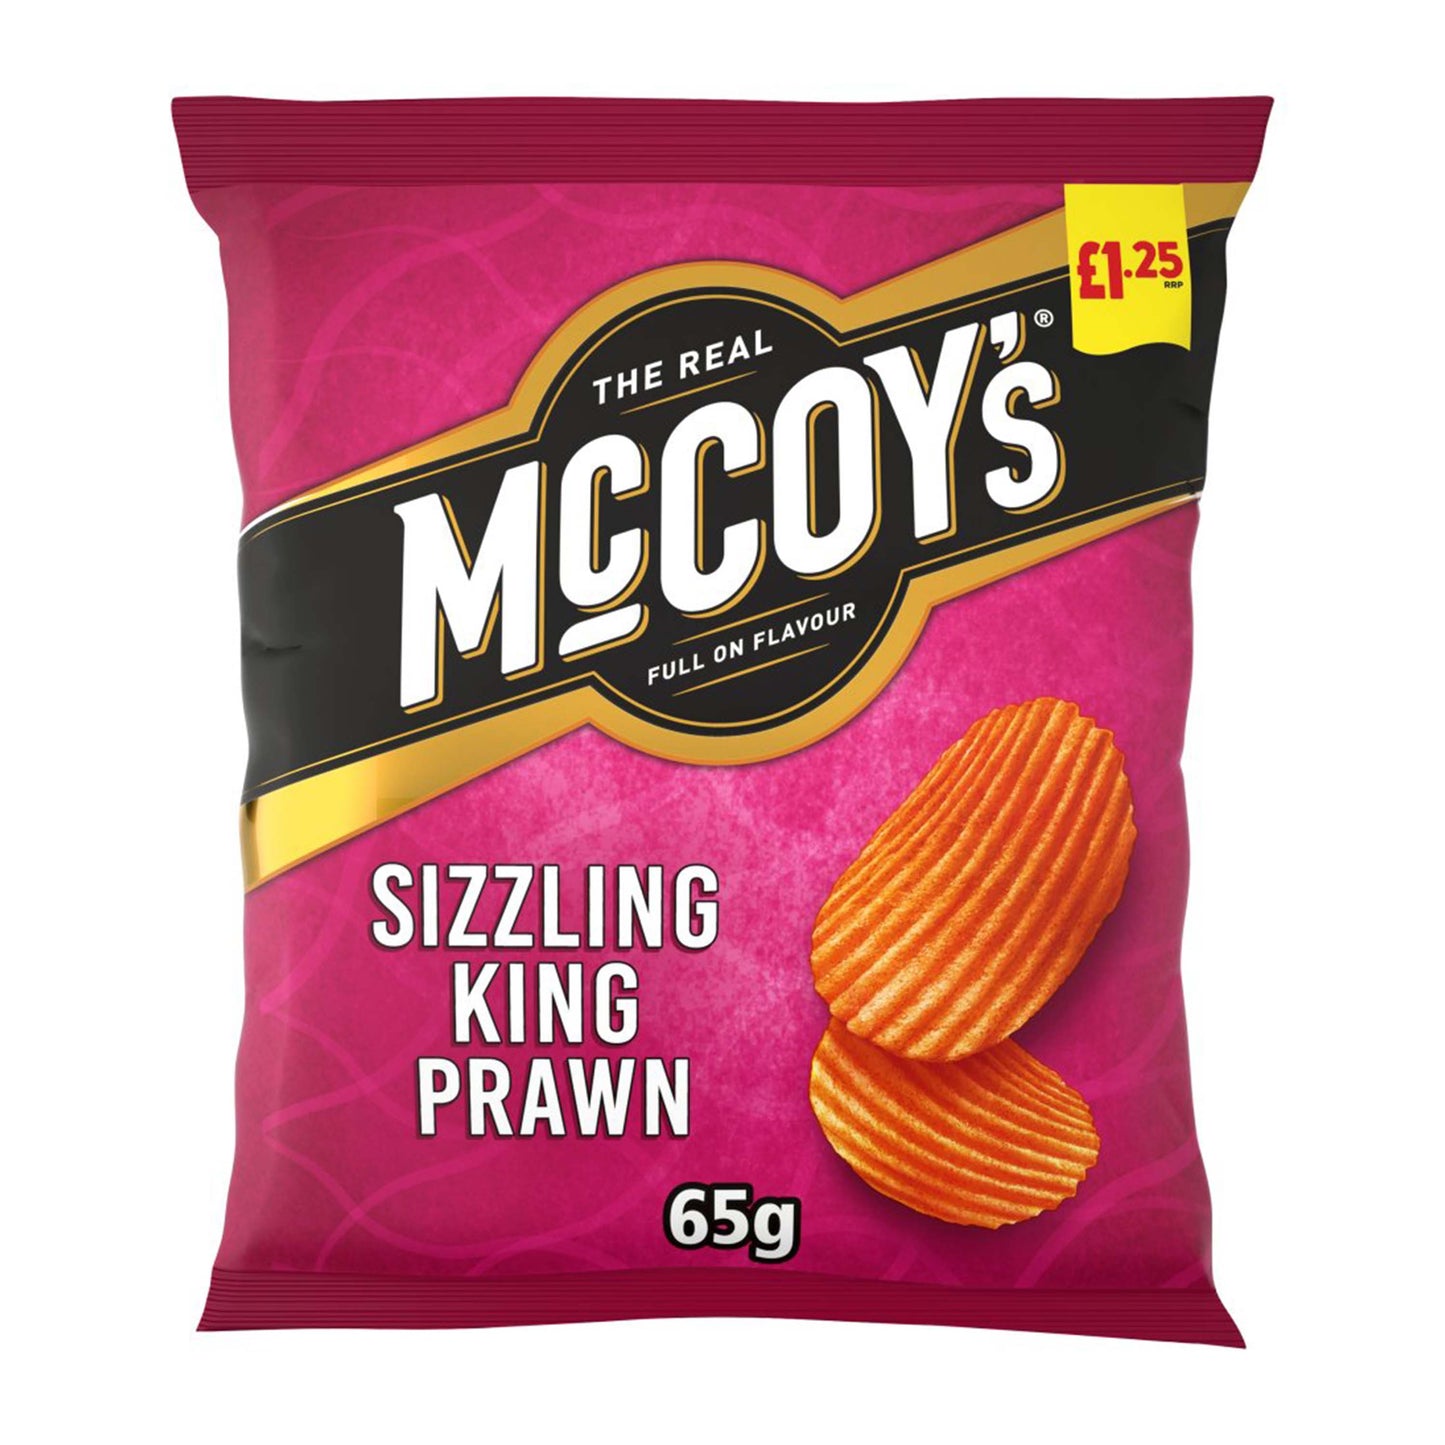 McCoy’s Sizzling King Prawn 65g – (£1.25 Bag) - British Snacks